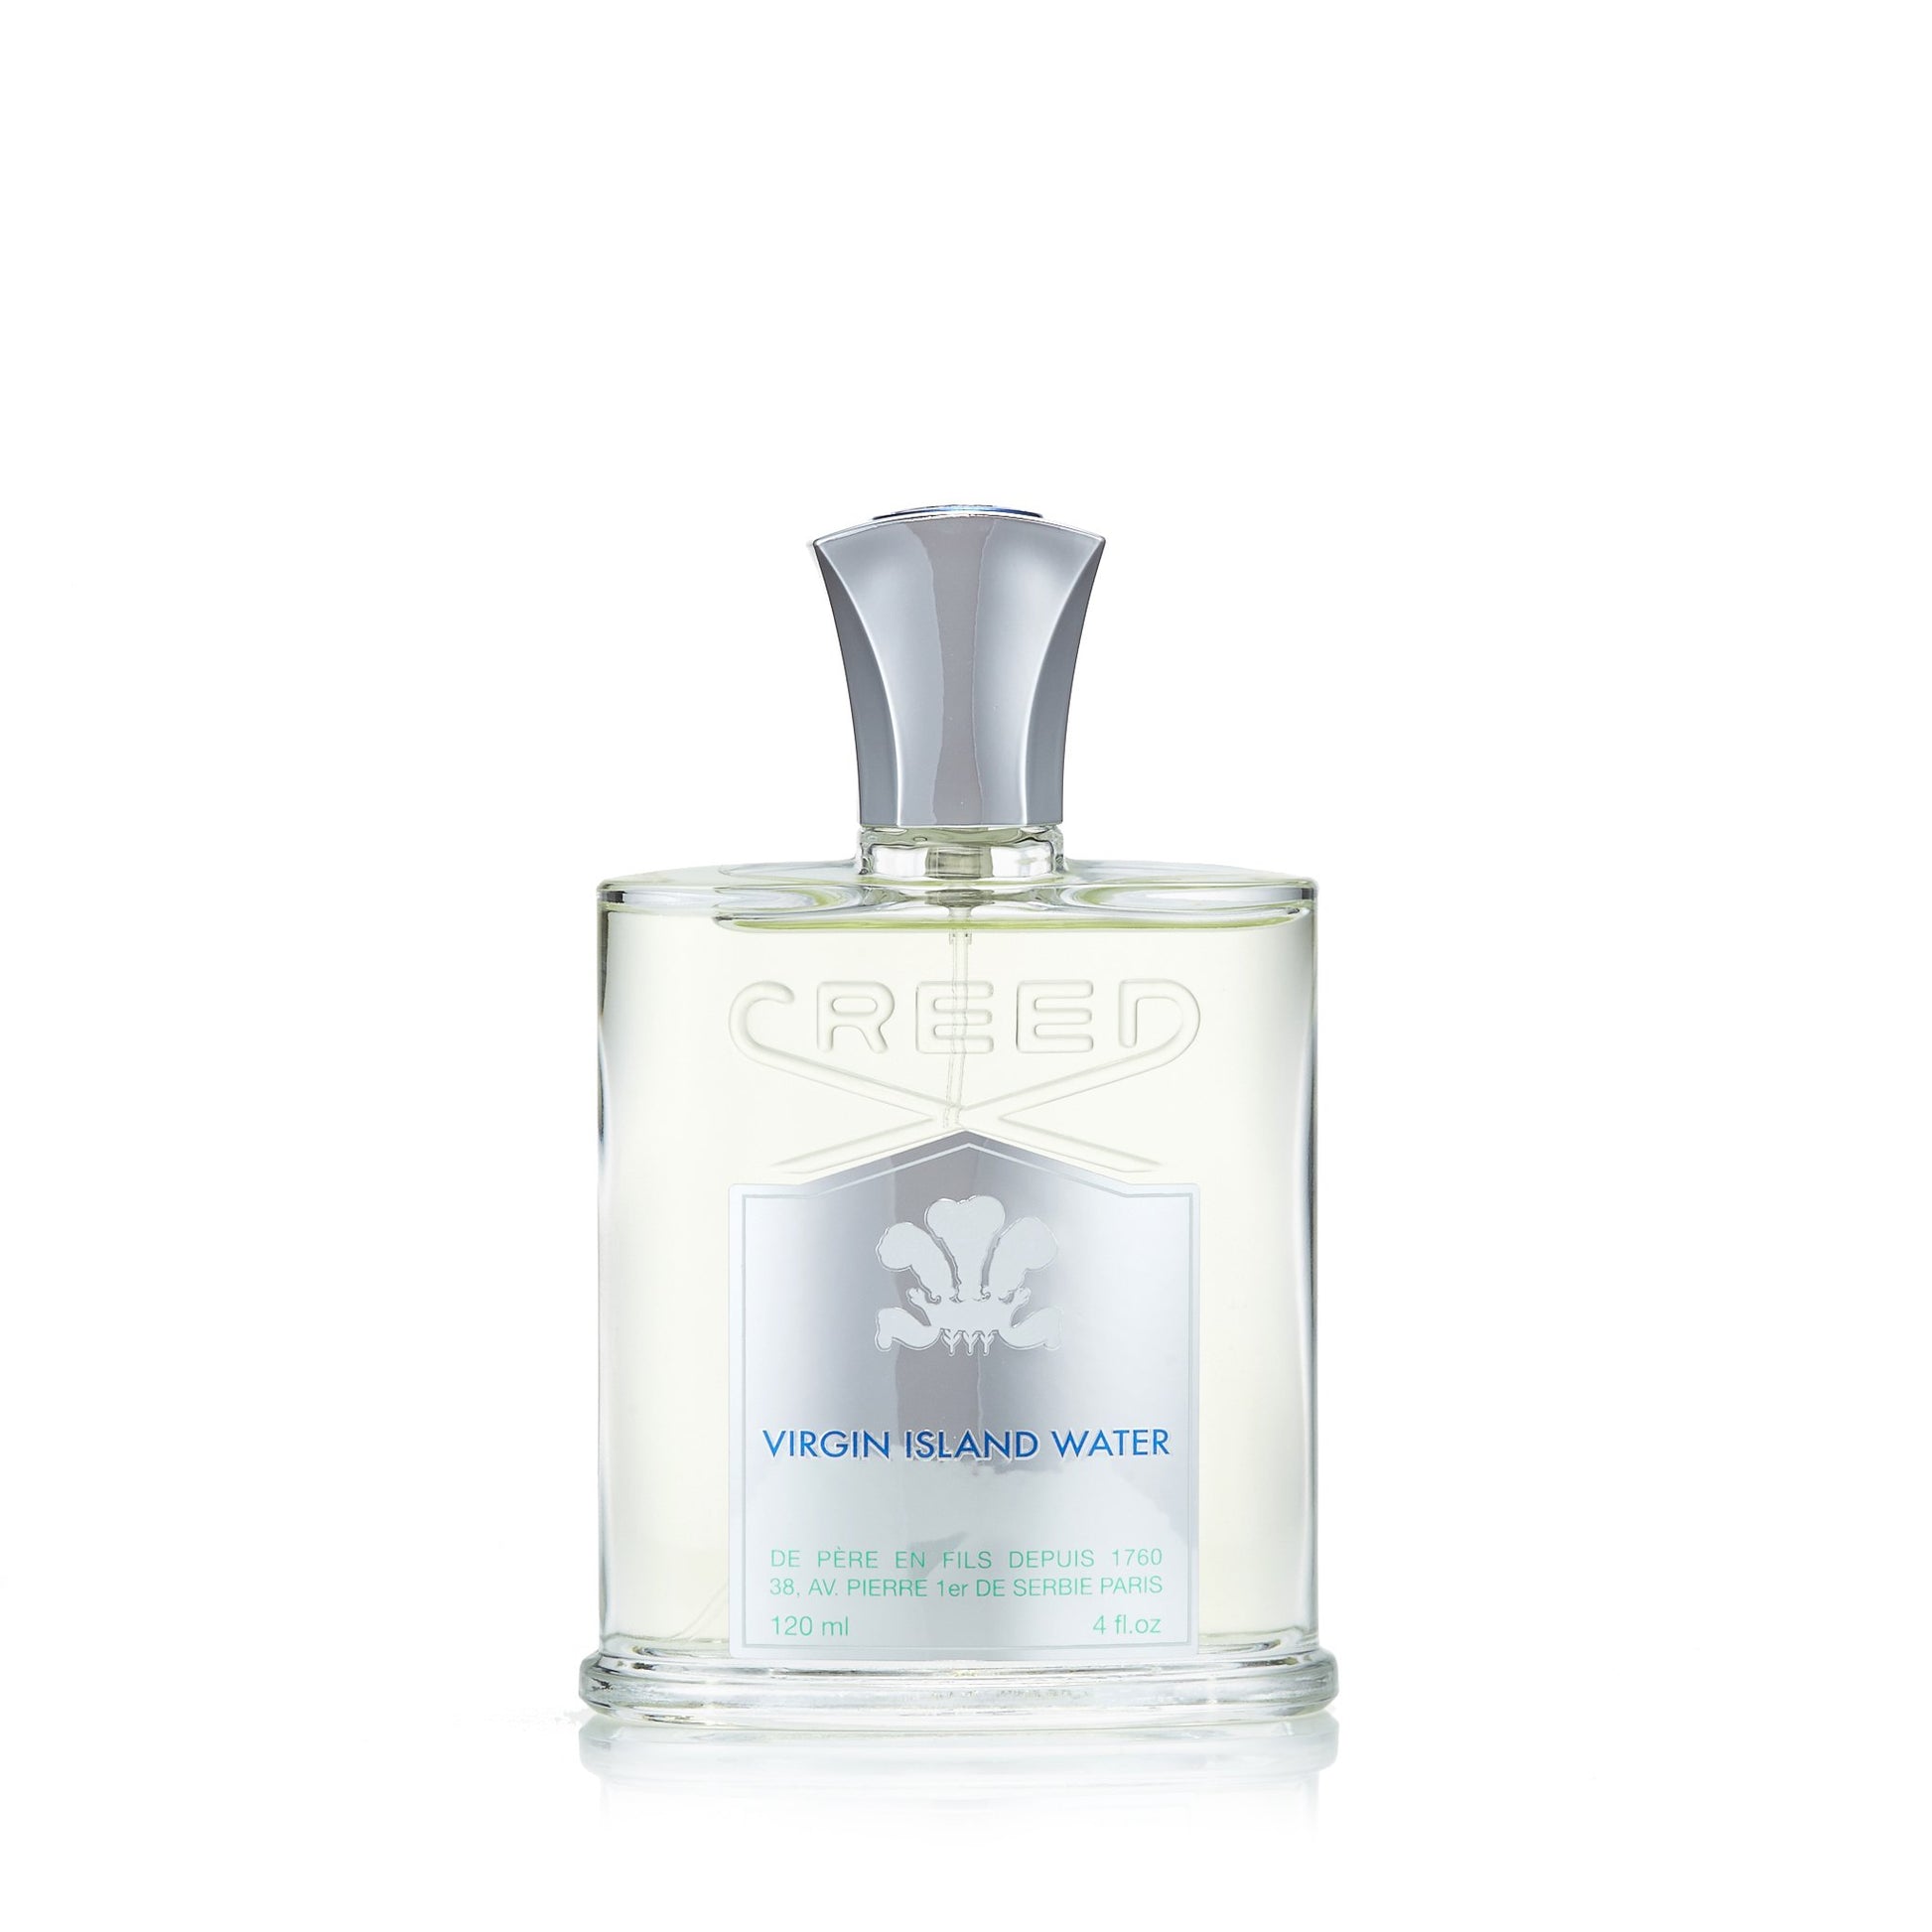 Virgin Island Water Eau de Parfum Spray for Men by Creed, Product image 2